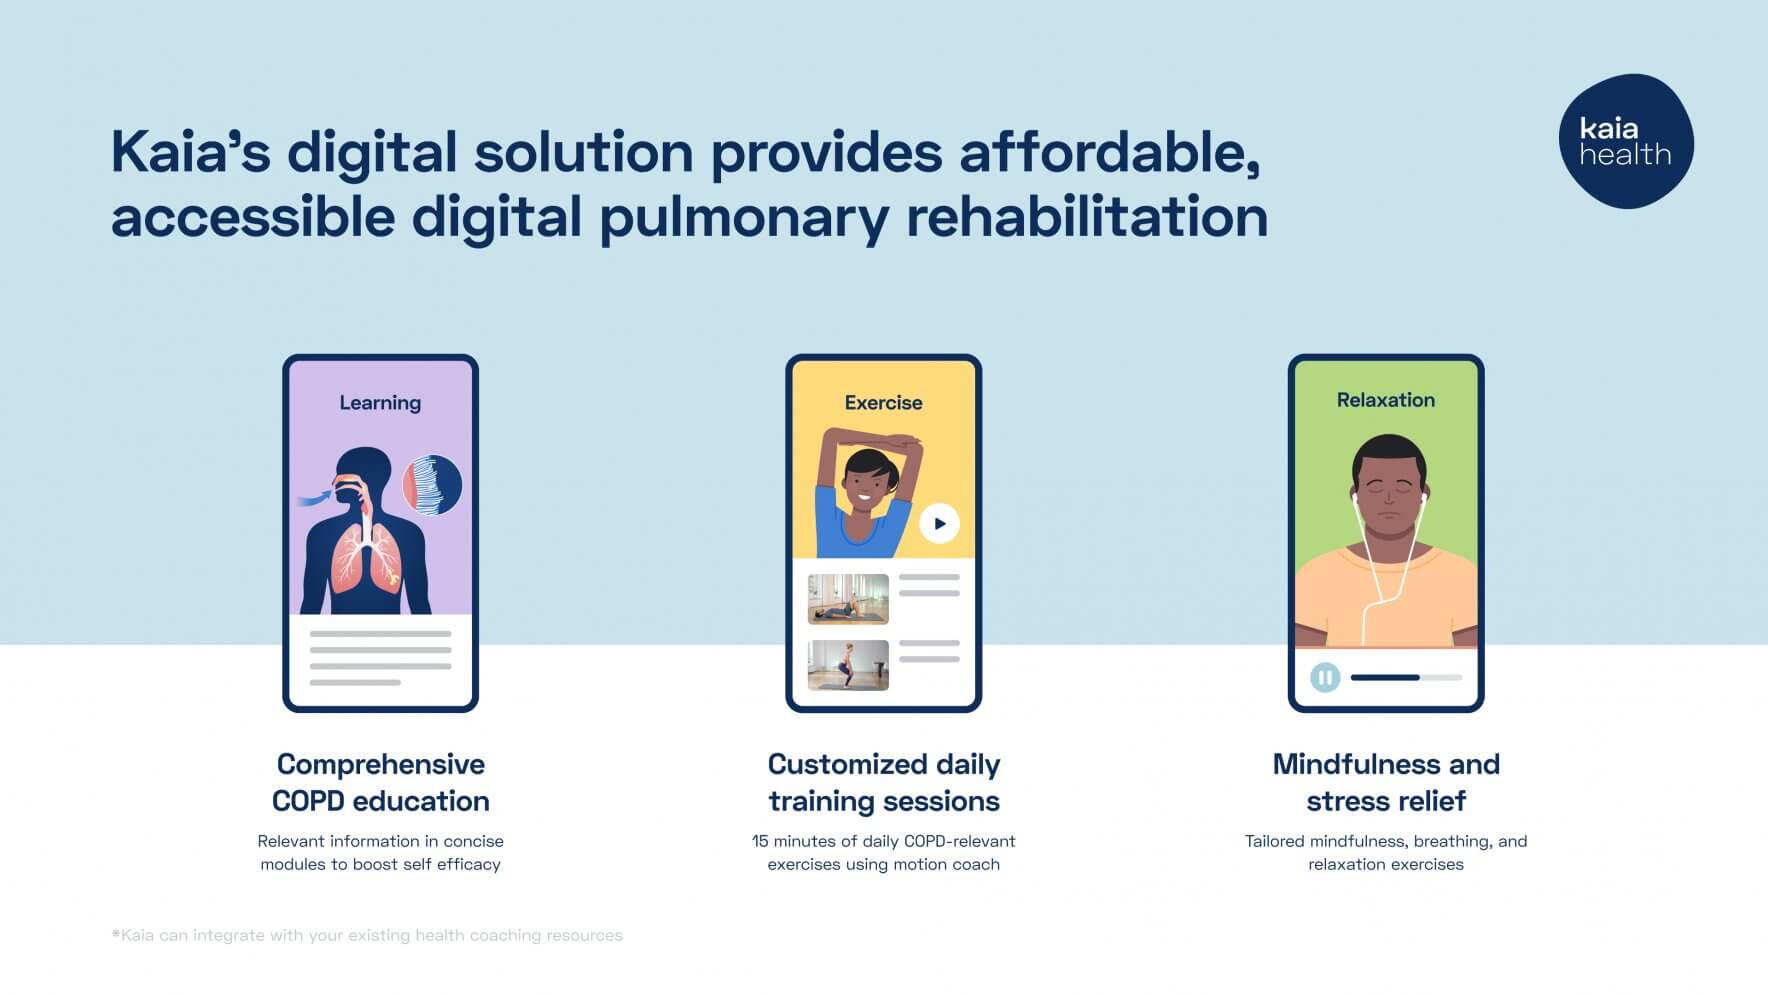 Illustration showing Kaia's digital solution for pulmonary rehabilitation.